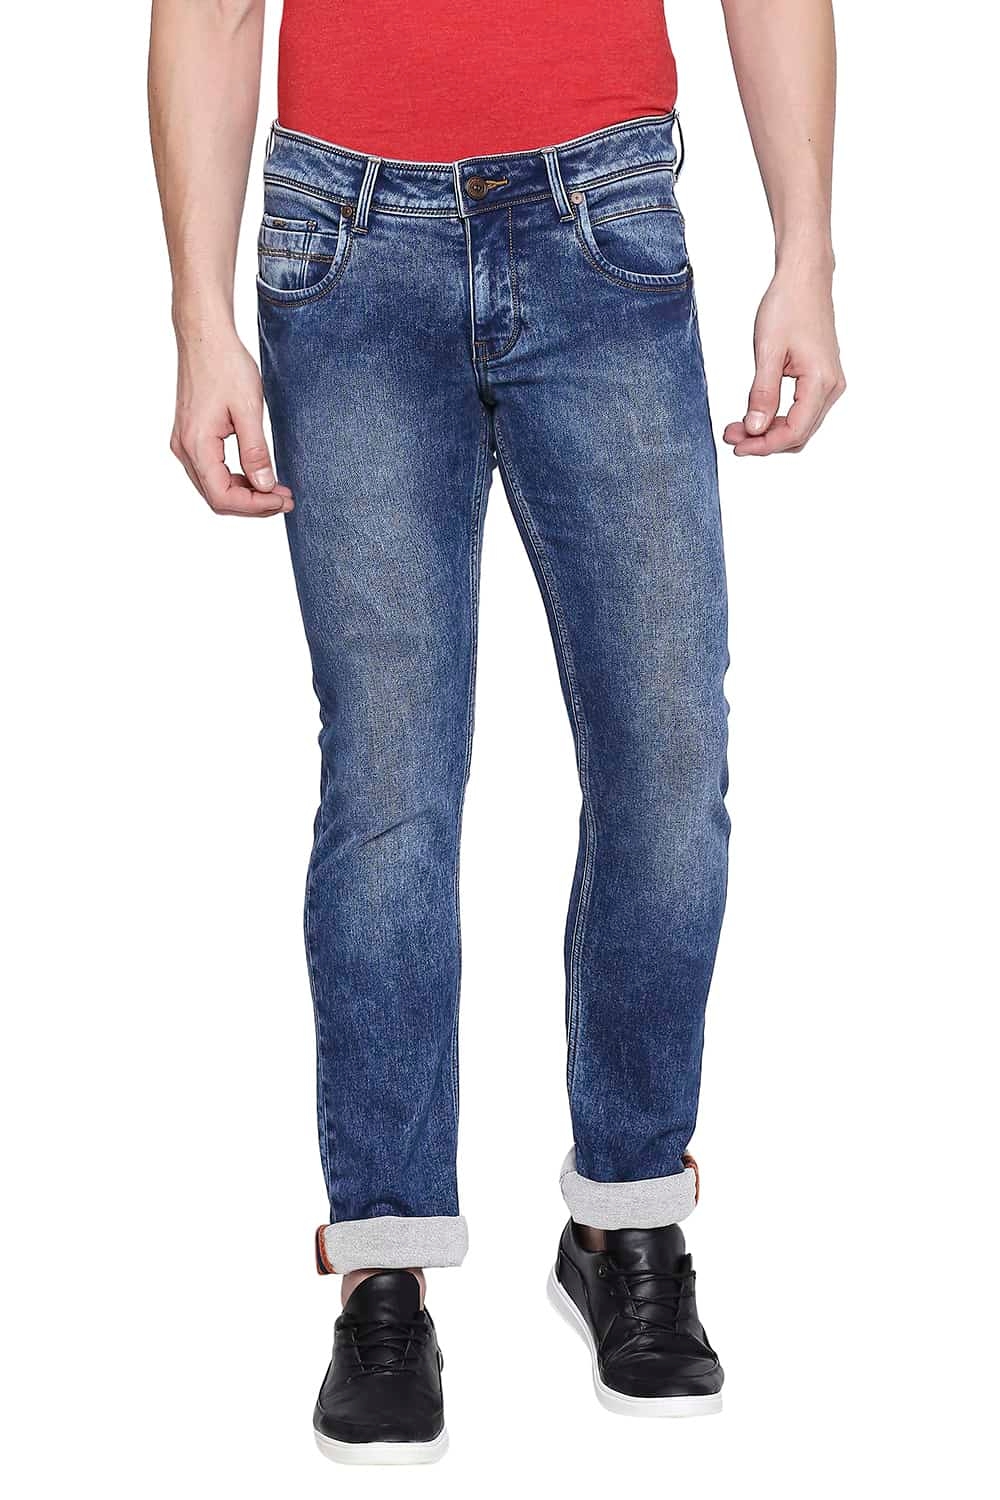 BASICS | Basics Torque Fit Blue Horizon Stretch Jeans